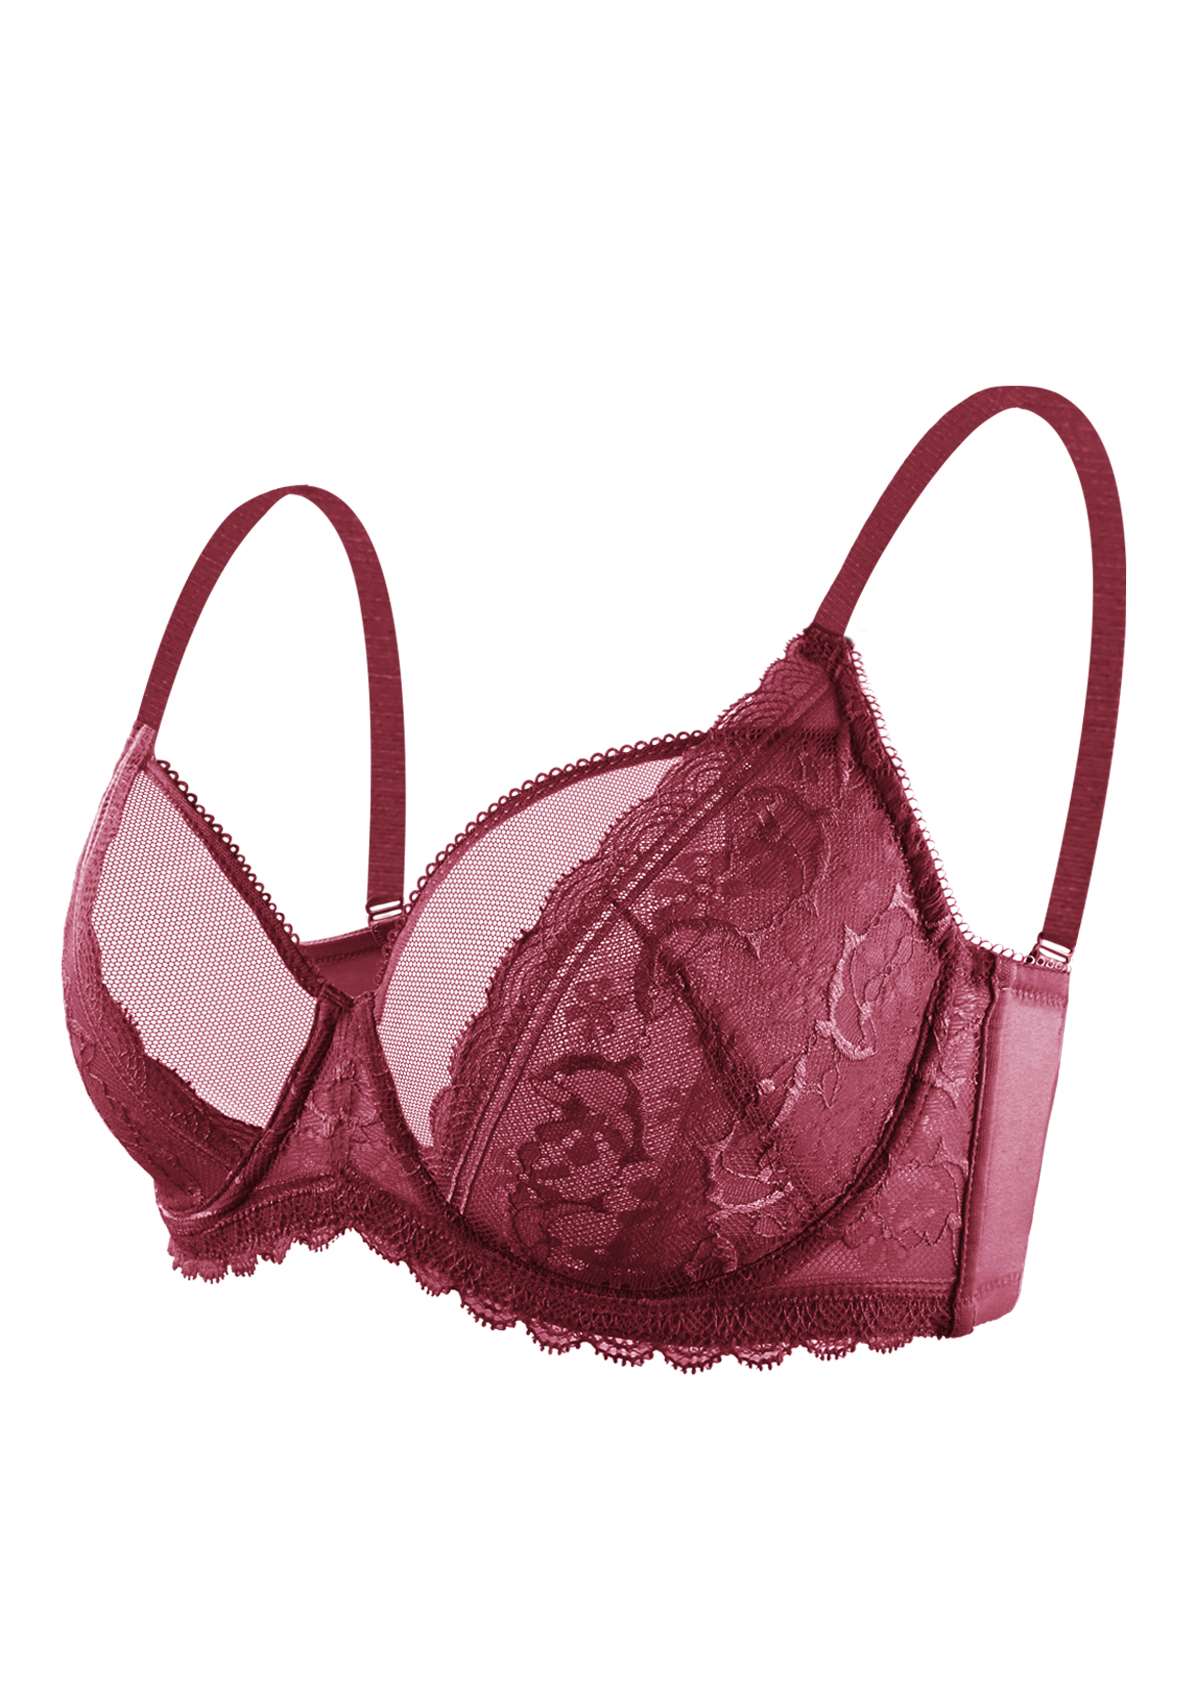 HSIA Anemone Sexy Lace Bra Panty Set: Thick Strap Bra - Burgundy / 40 / DDD/F